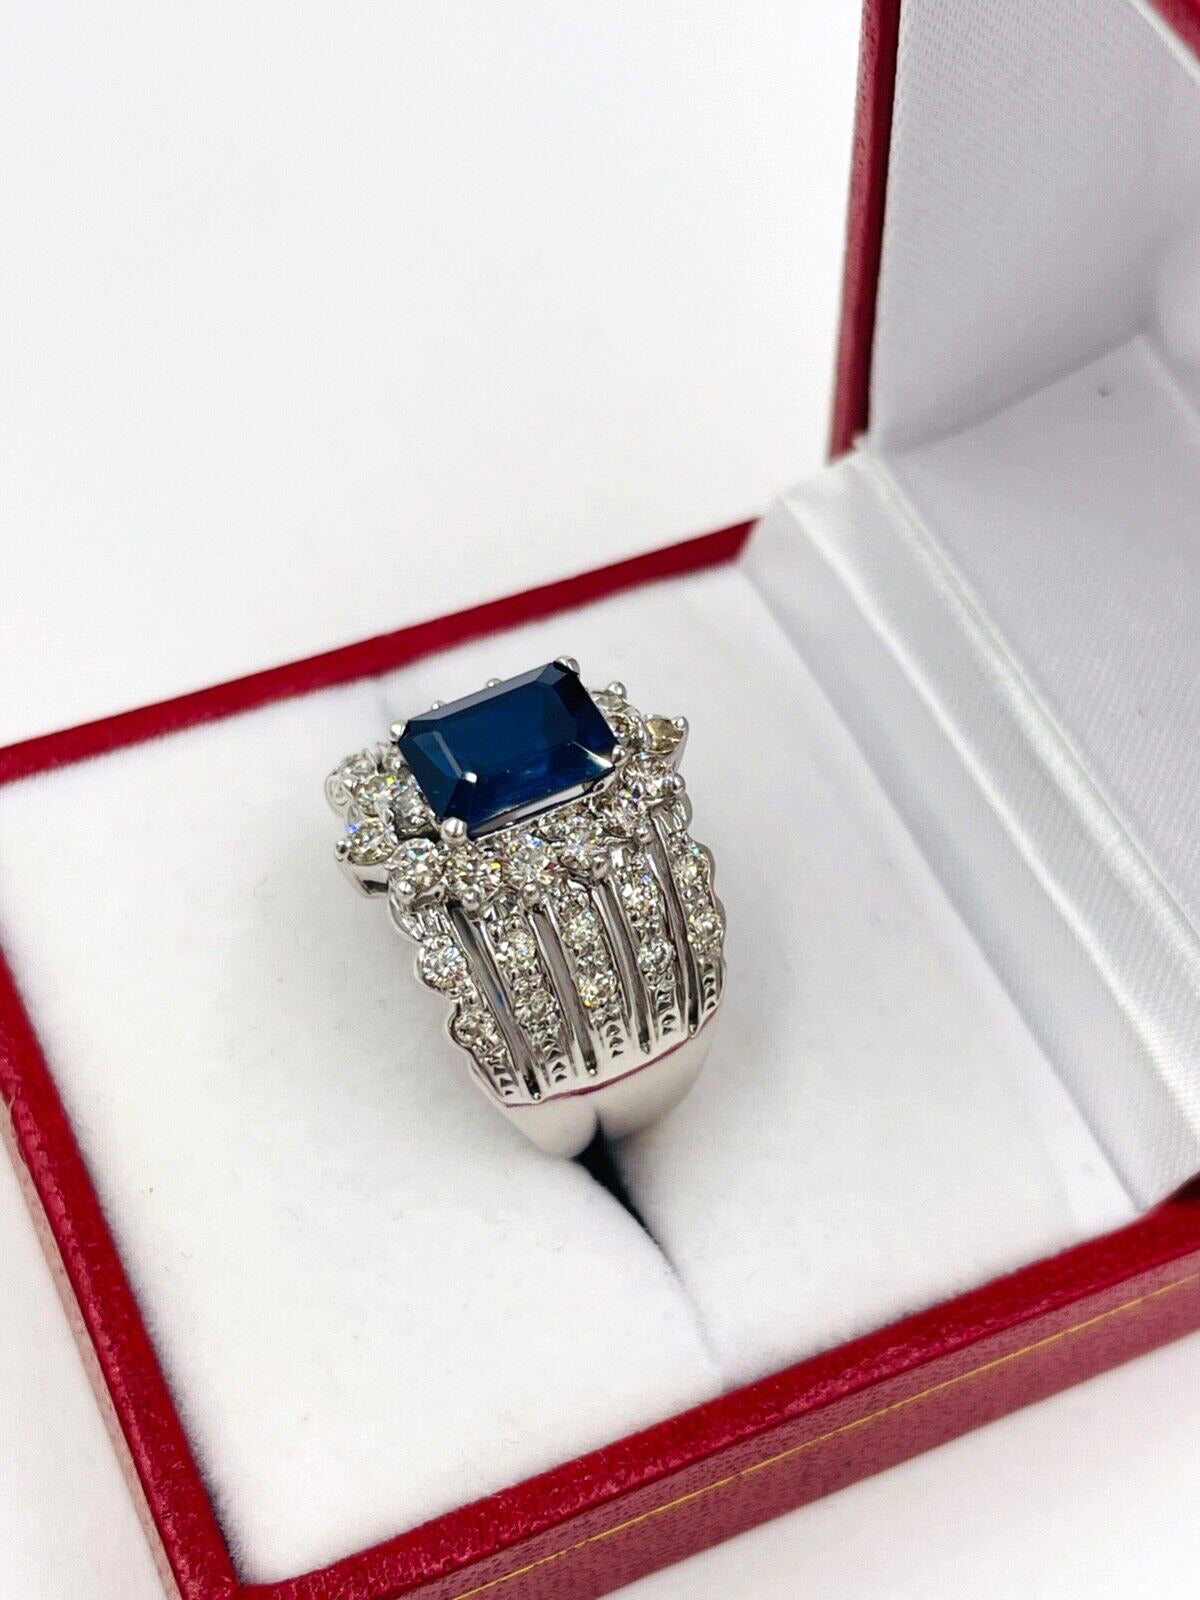 LeVian 14K White Gold Blue Sapphire Diamond Cocktail Ring Size 7